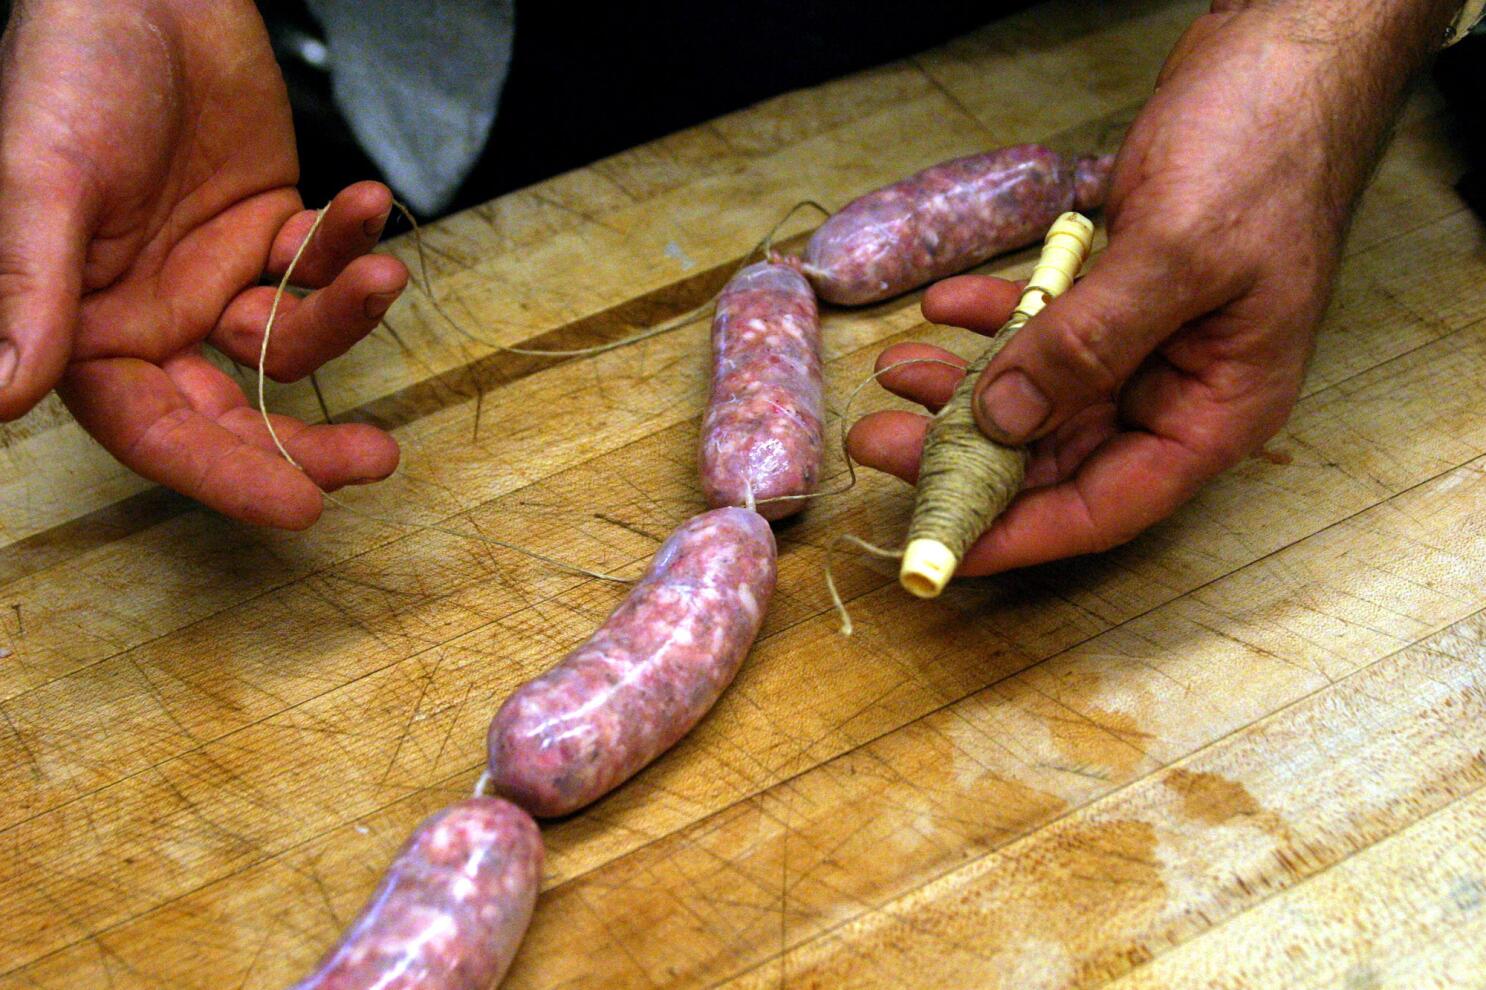 Mini-chorizo heads the wrong way in sausage race